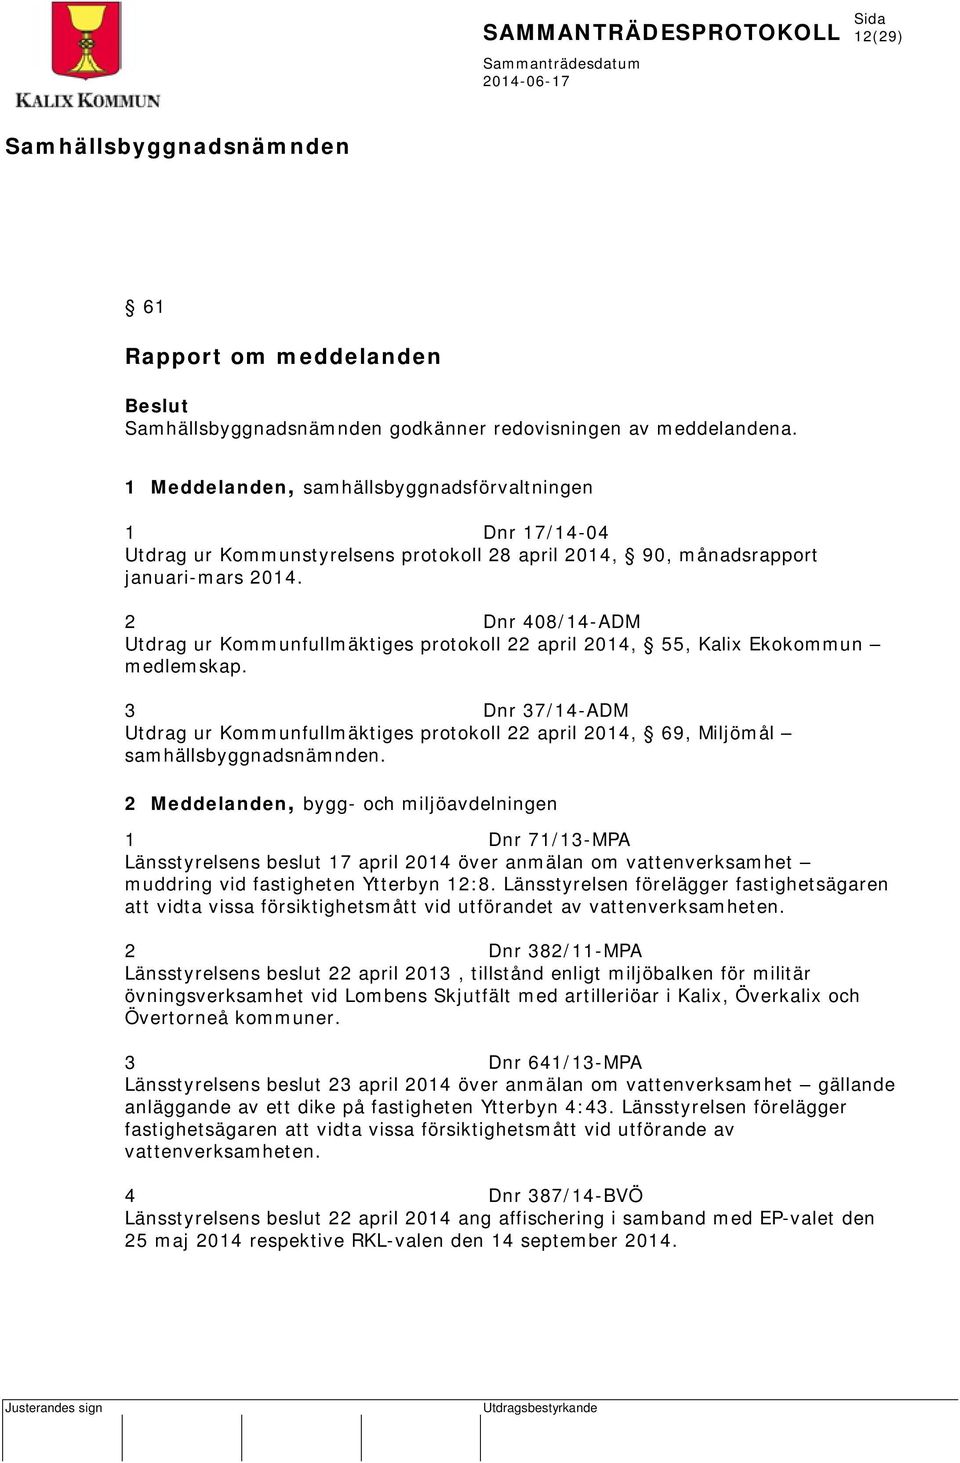 2 Dnr 408/14-ADM Utdrag ur Kommunfullmäktiges protokoll 22 april 2014, 55, Kalix Ekokommun medlemskap.